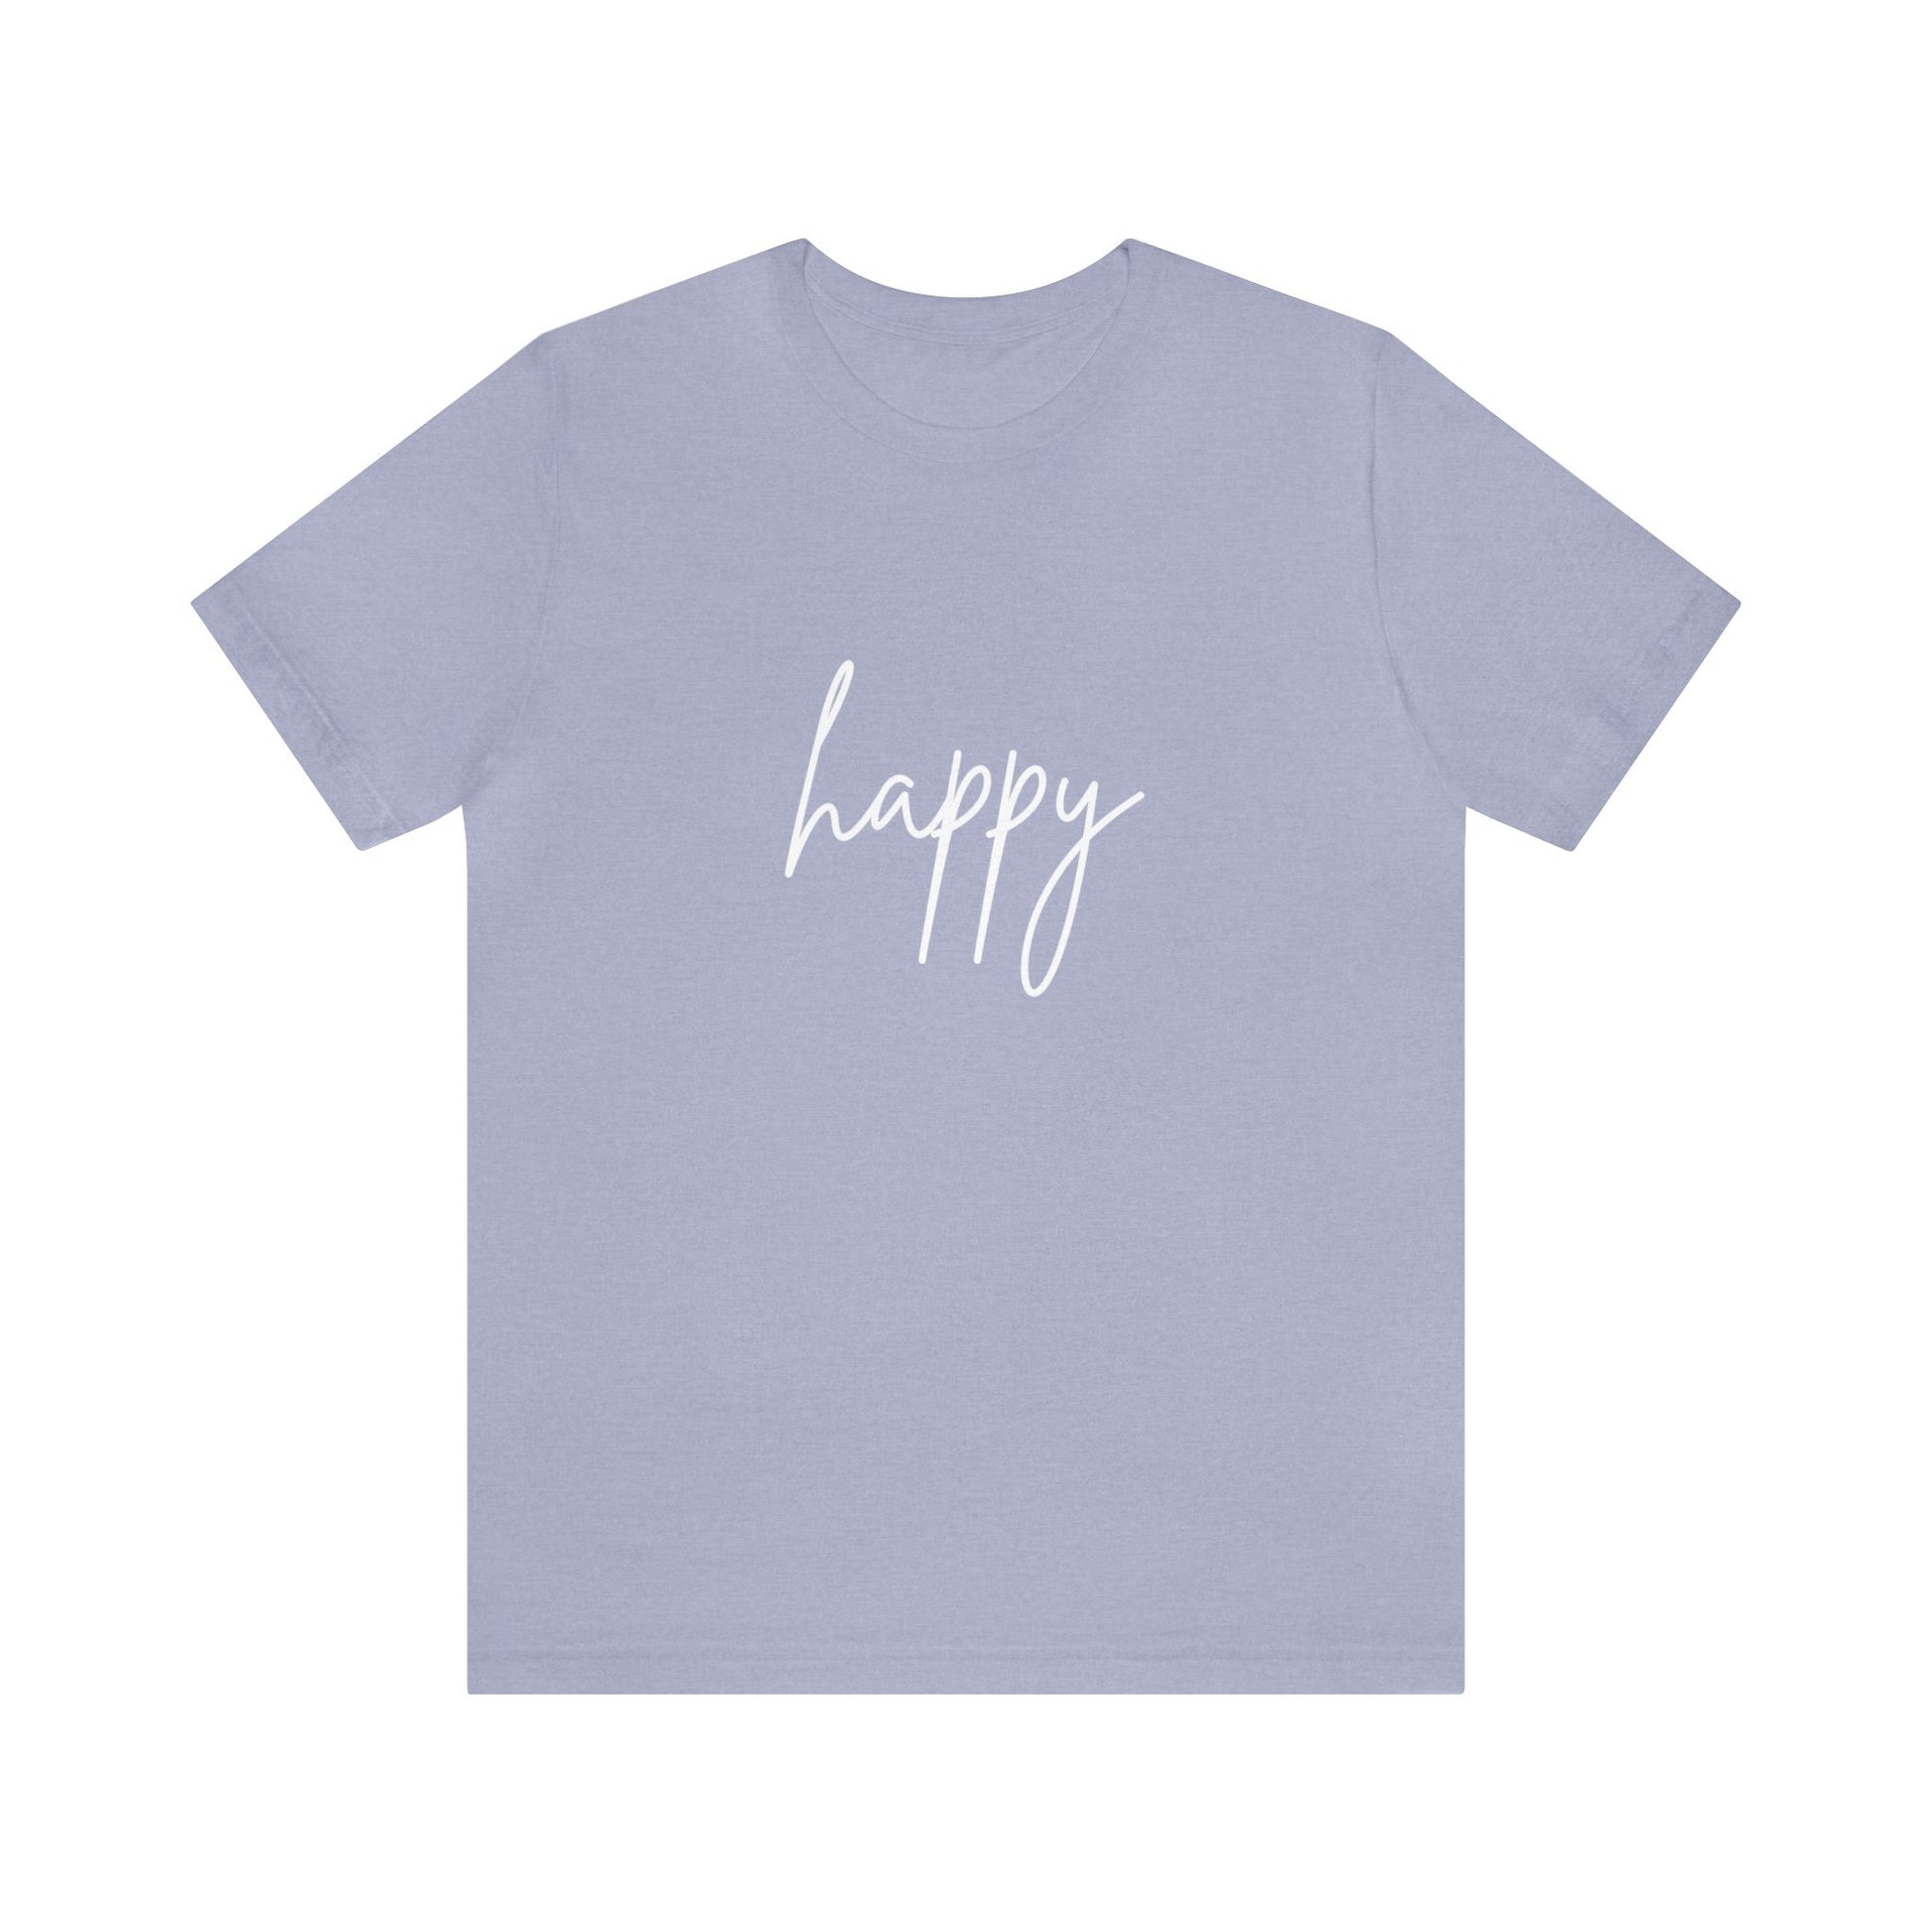 Happy T-shirt, girl gift, minimalist gift, custom t-shirt, funny shirts, crew neck shirt, unisex t-shirt, girl shirt